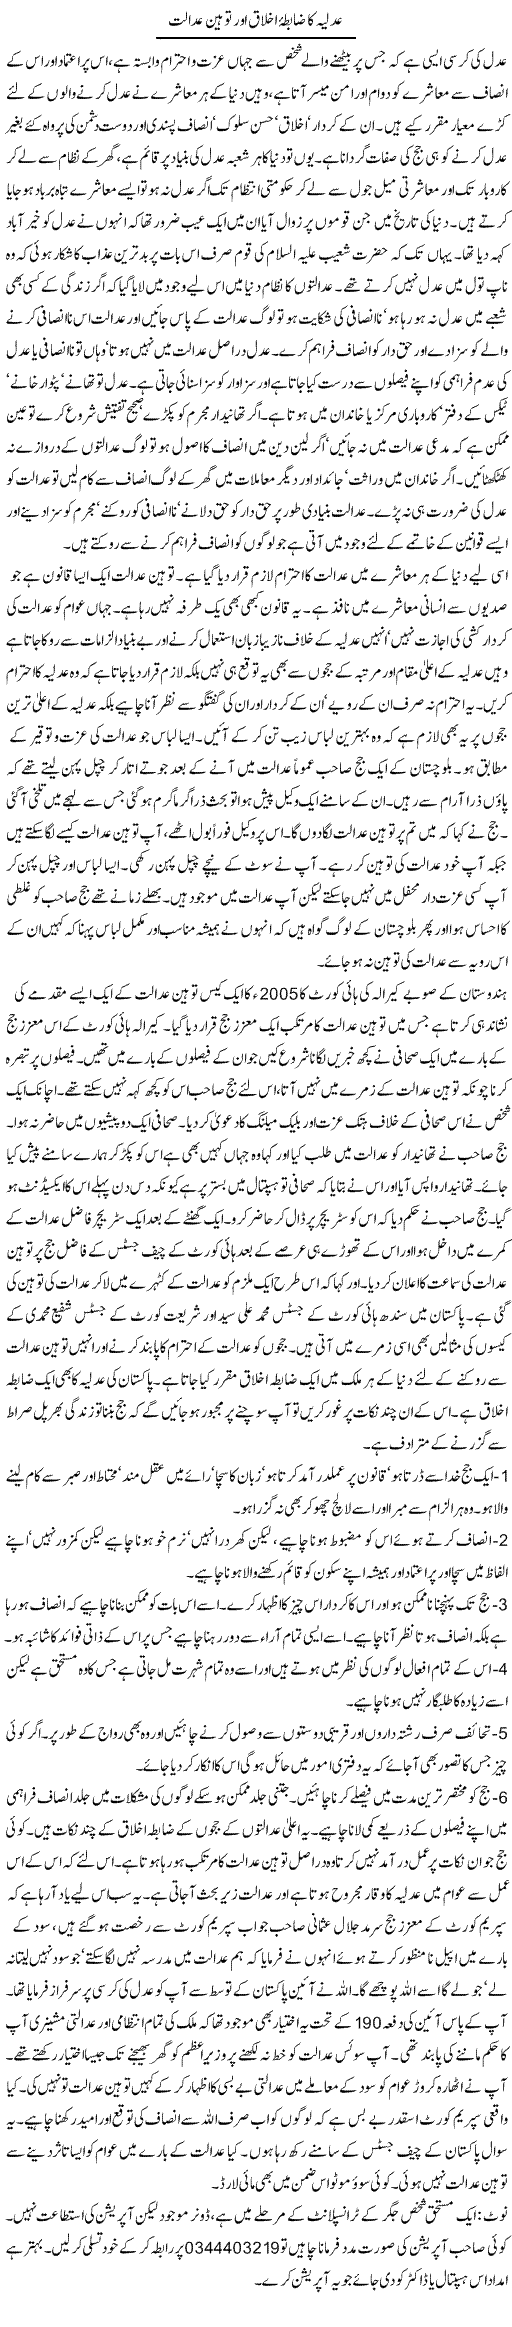 Adlia Ka Zabita Ikhlaq Aur Toheen Adalat | Orya Maqbool Jan | Daily Urdu Columns